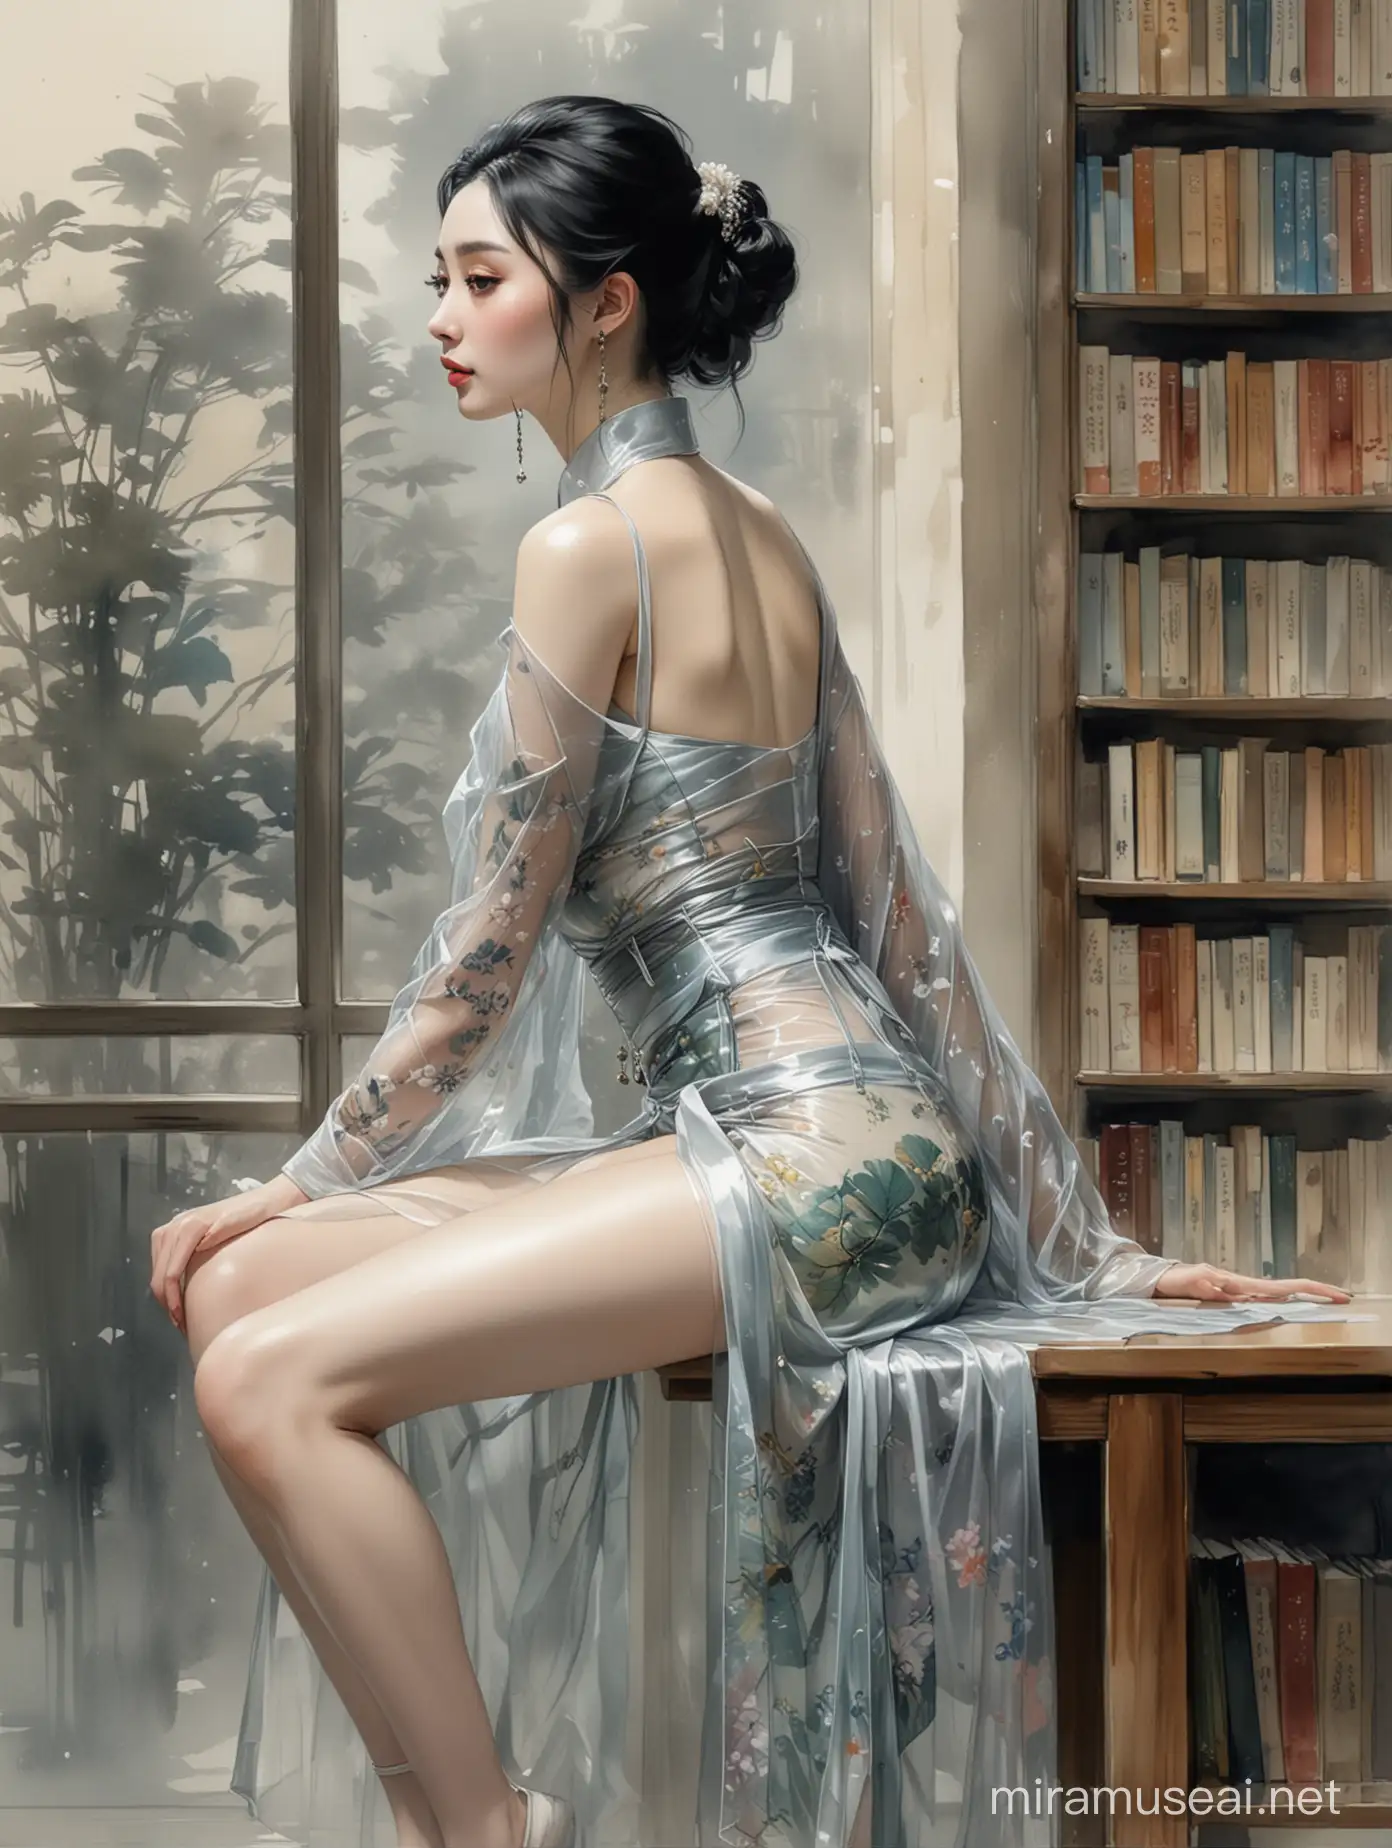 Ethereal Fan Bingbing in Transparent Hanfu Dress Leaning Against Library Shelf